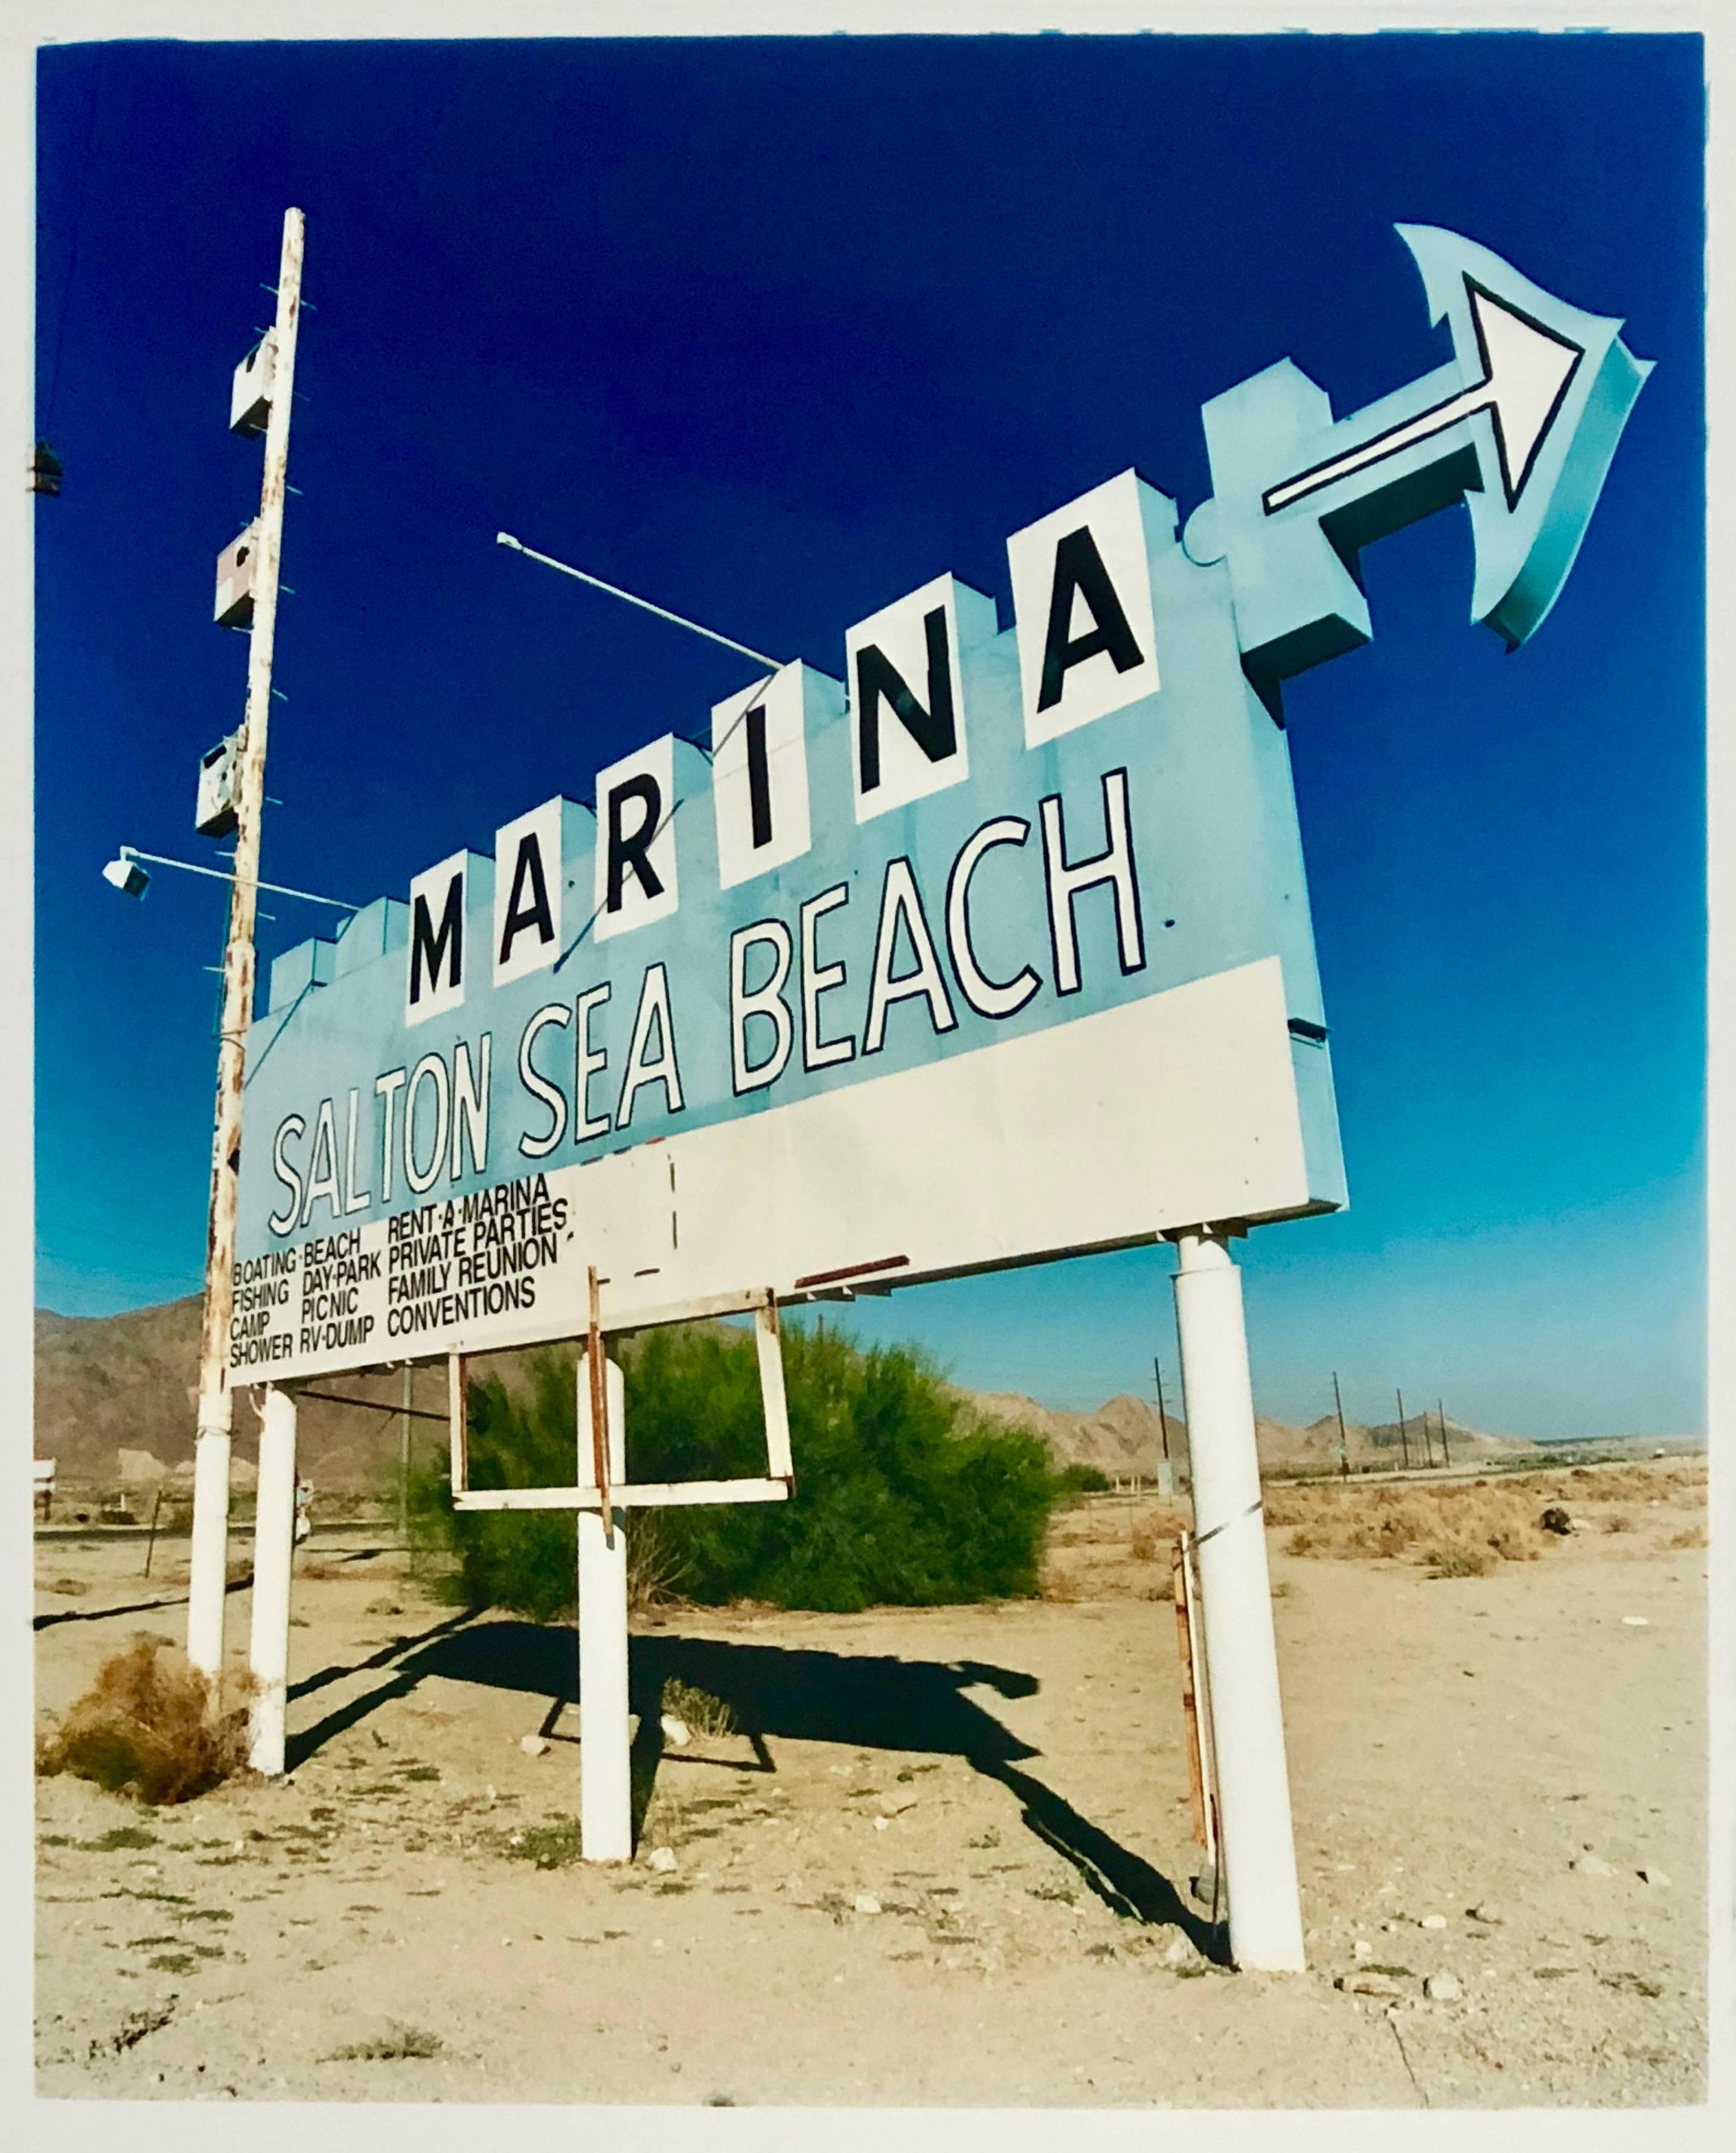 Richard Heeps Landscape Photograph - Marina Sign I, Salton Sea Beach, California - Roadside sign color photography